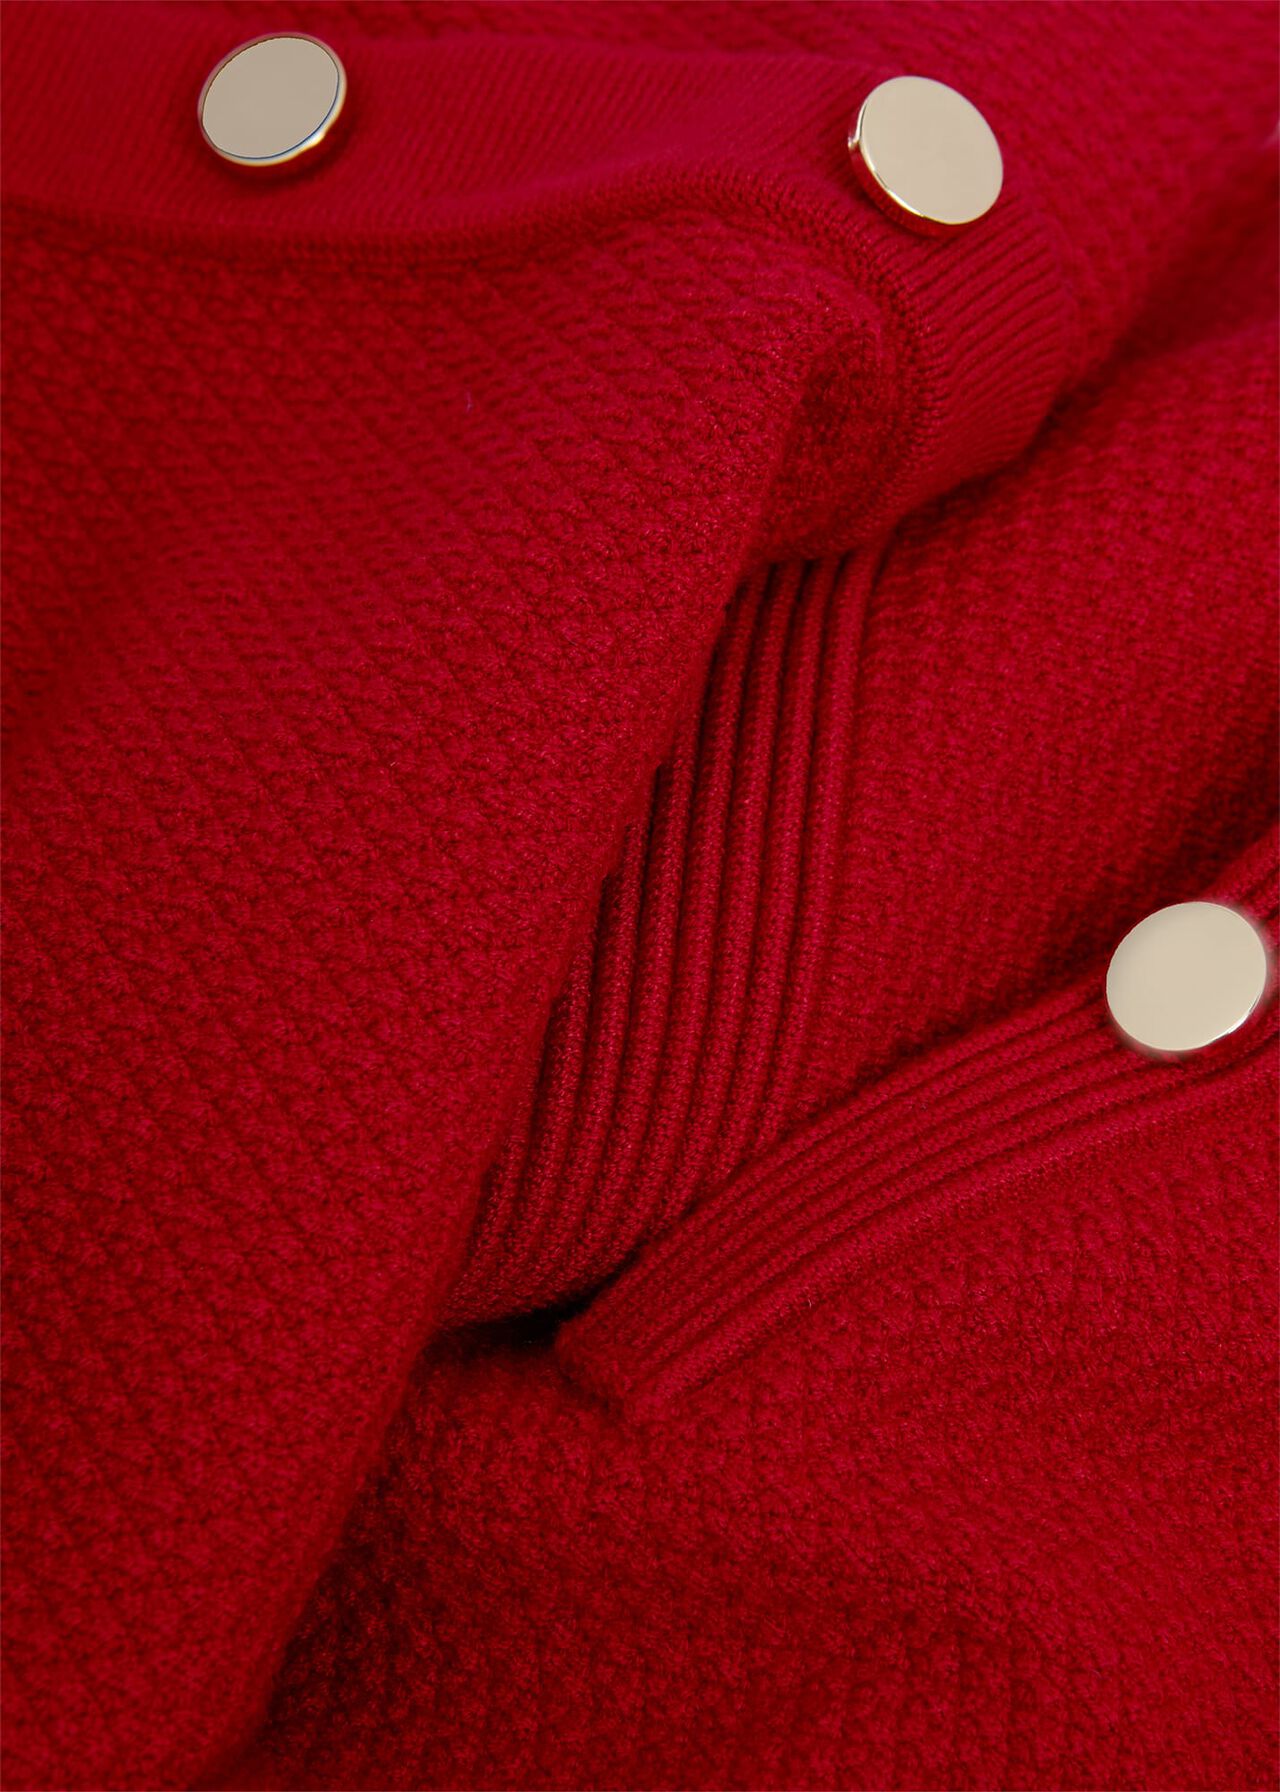 Noa Knitted Dress, Firebrick Red, hi-res